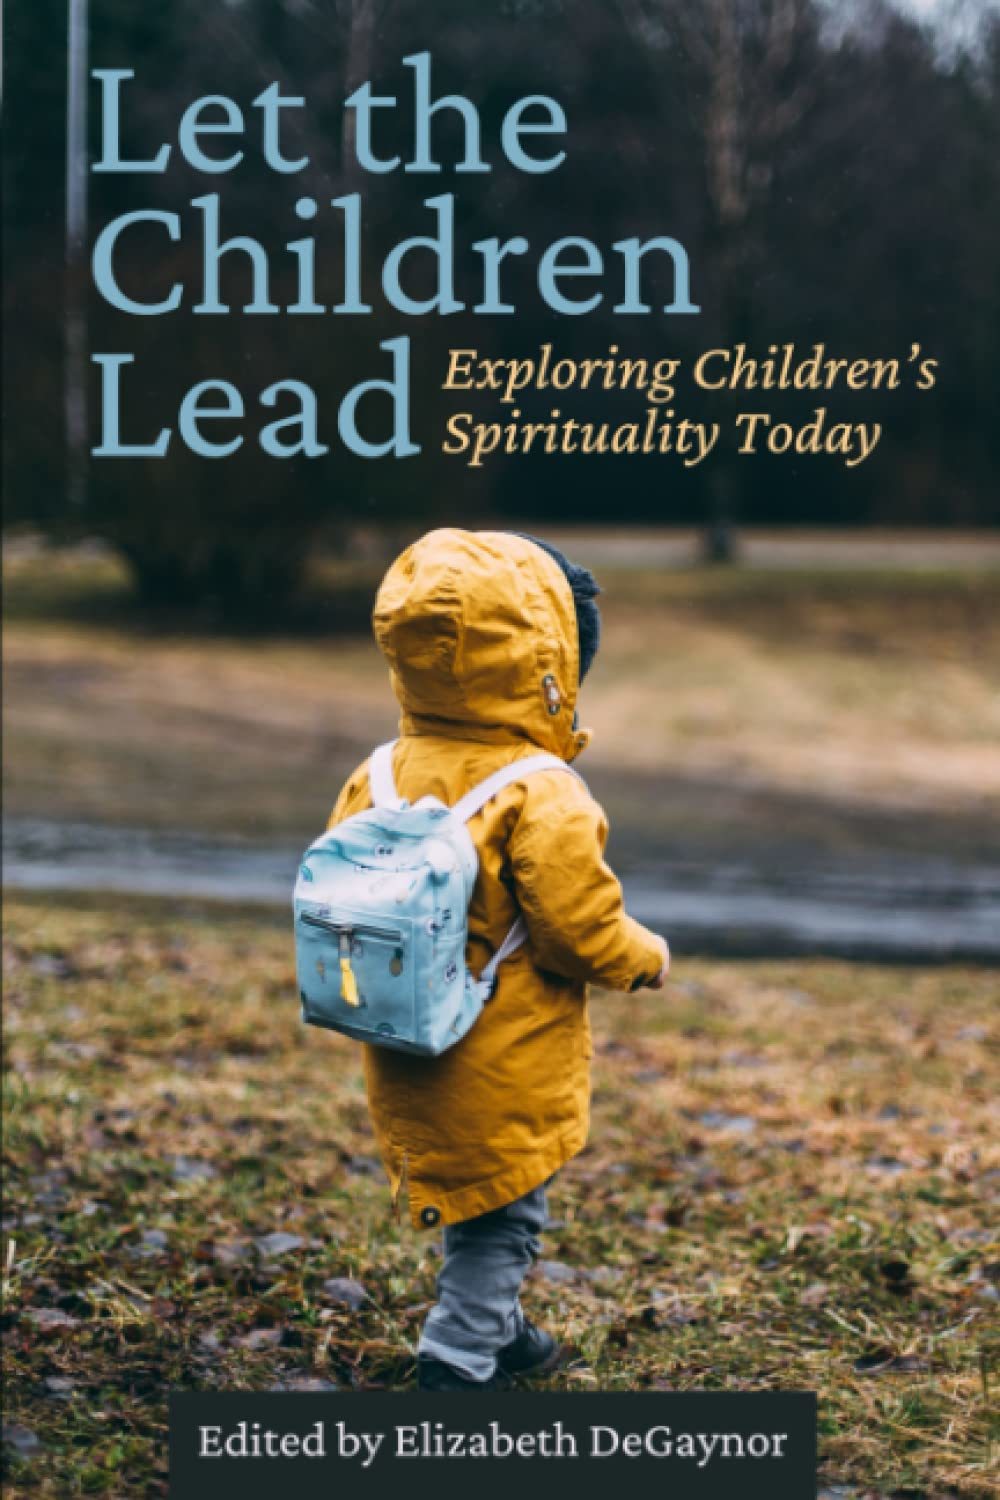 Let the children lead exploring children's spirituality today.